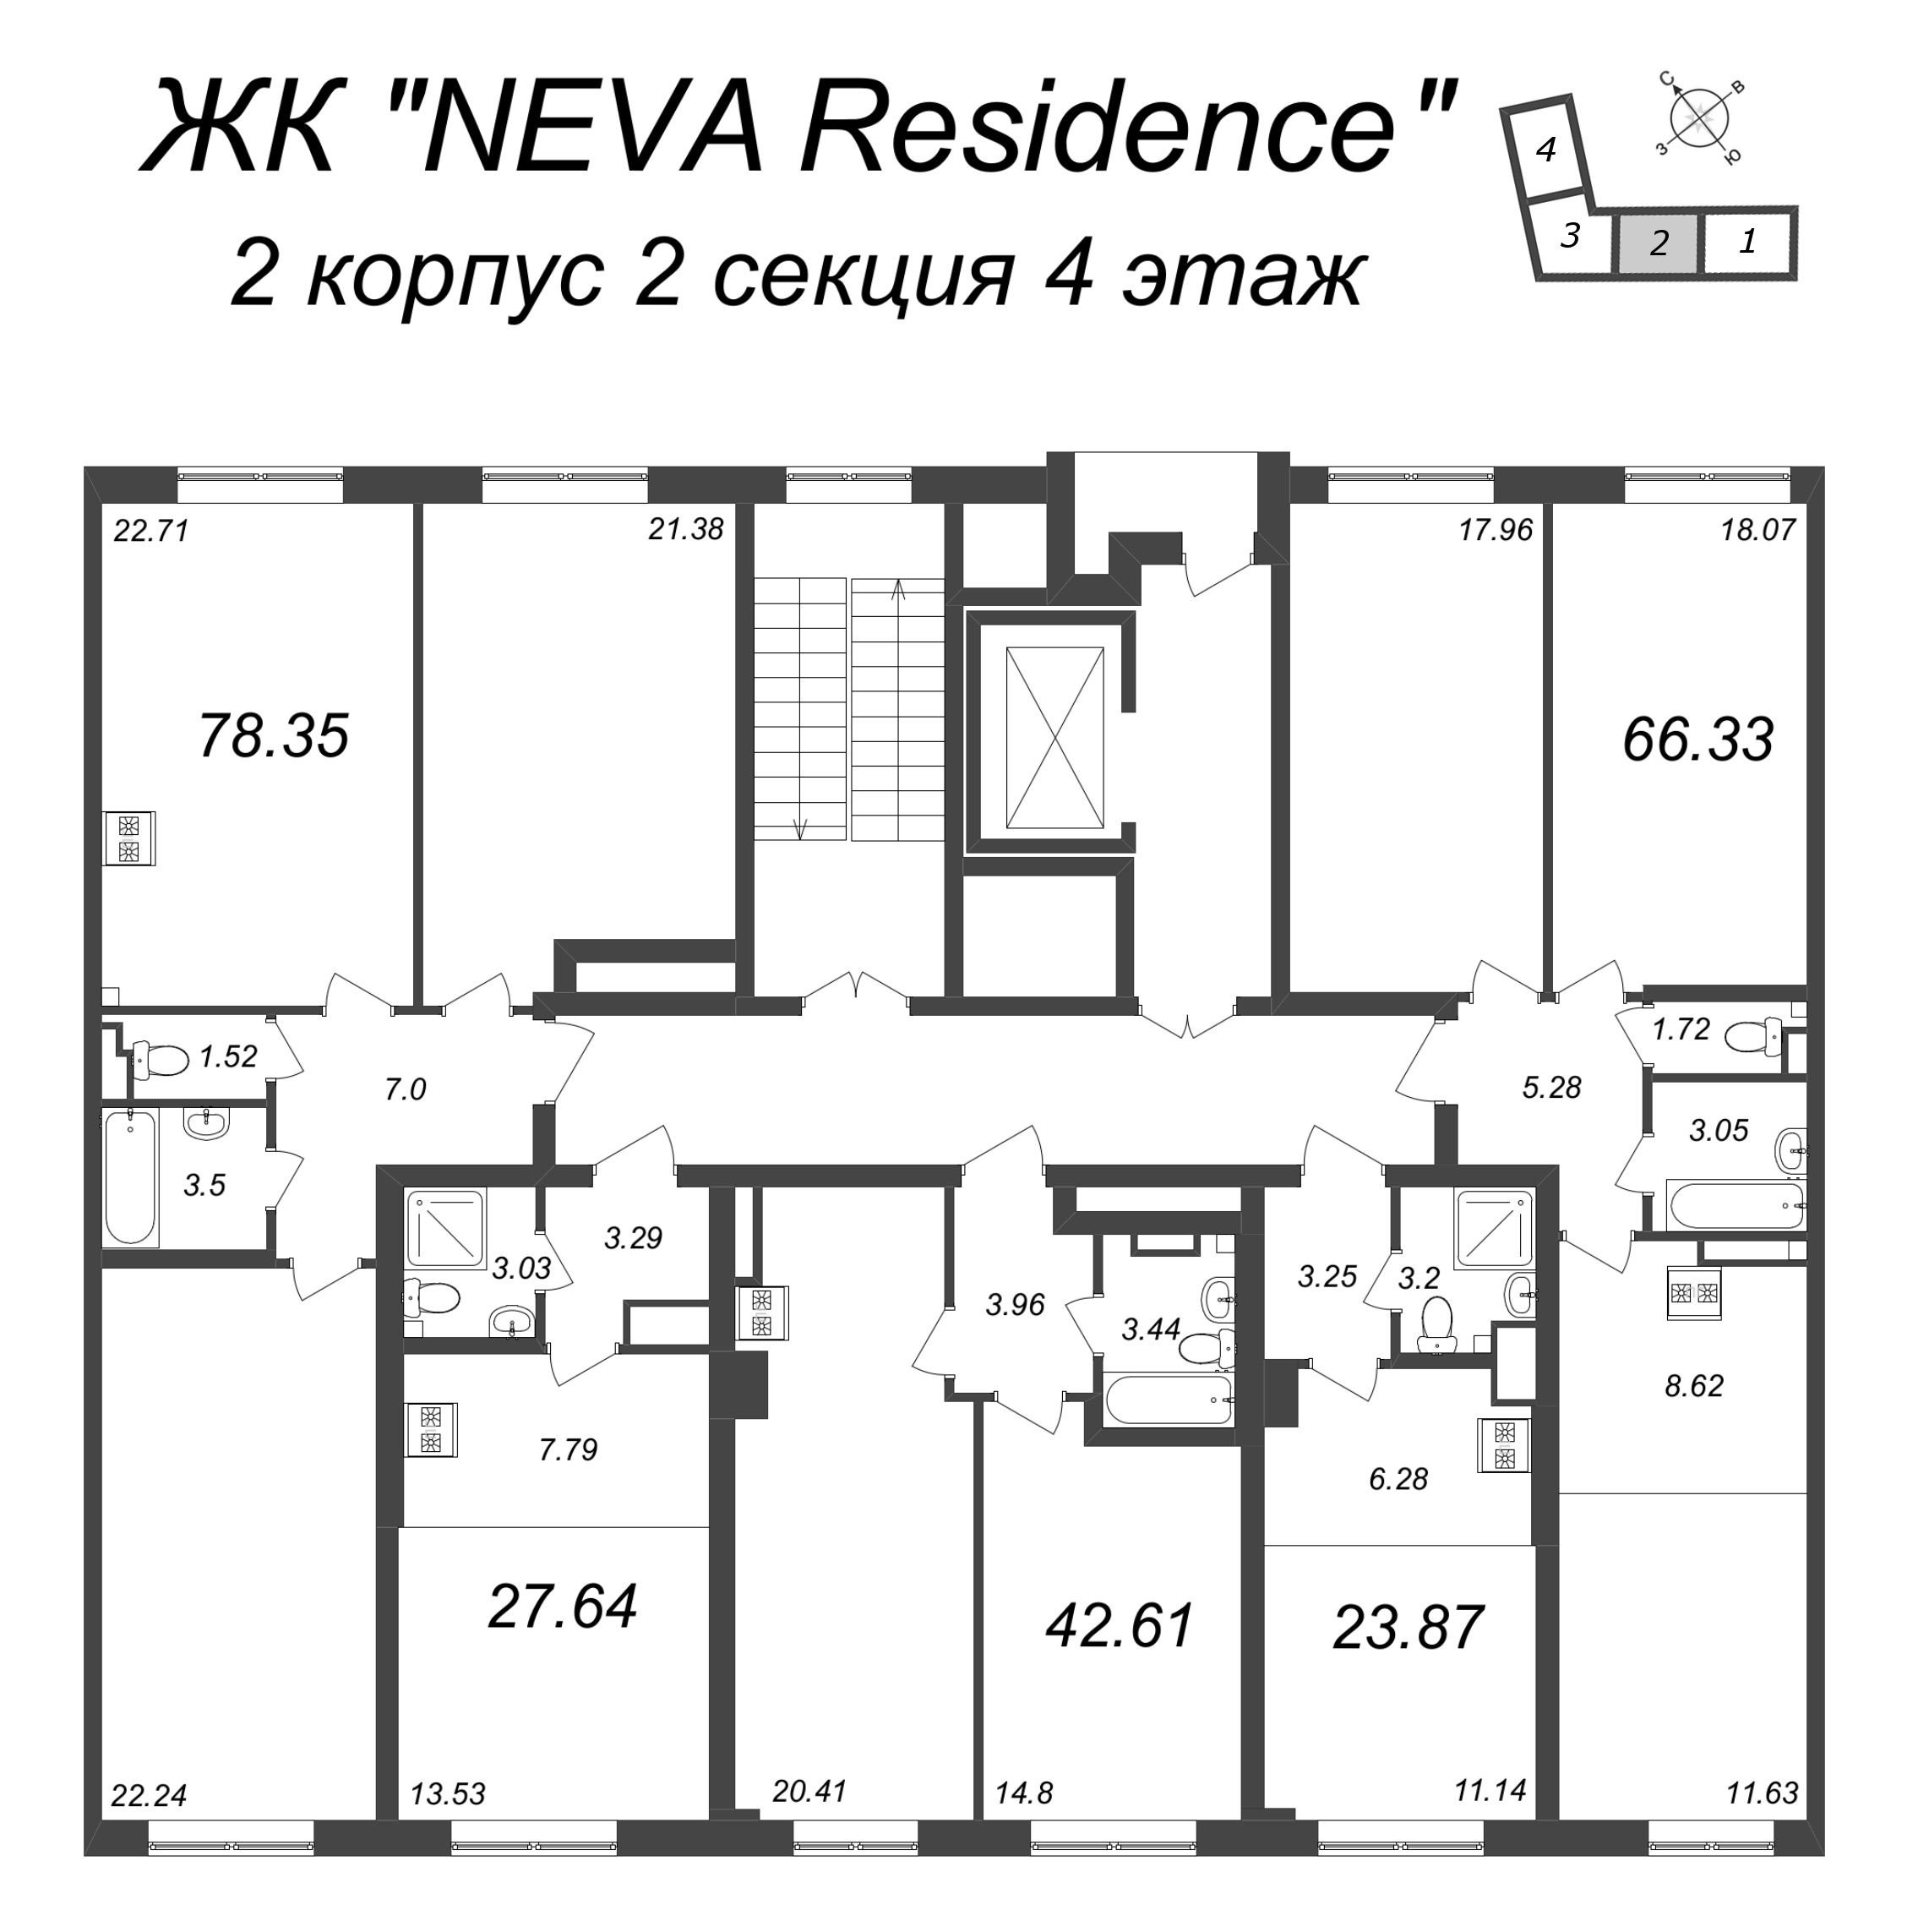 3-комнатная (Евро) квартира, 78.35 м² - планировка этажа